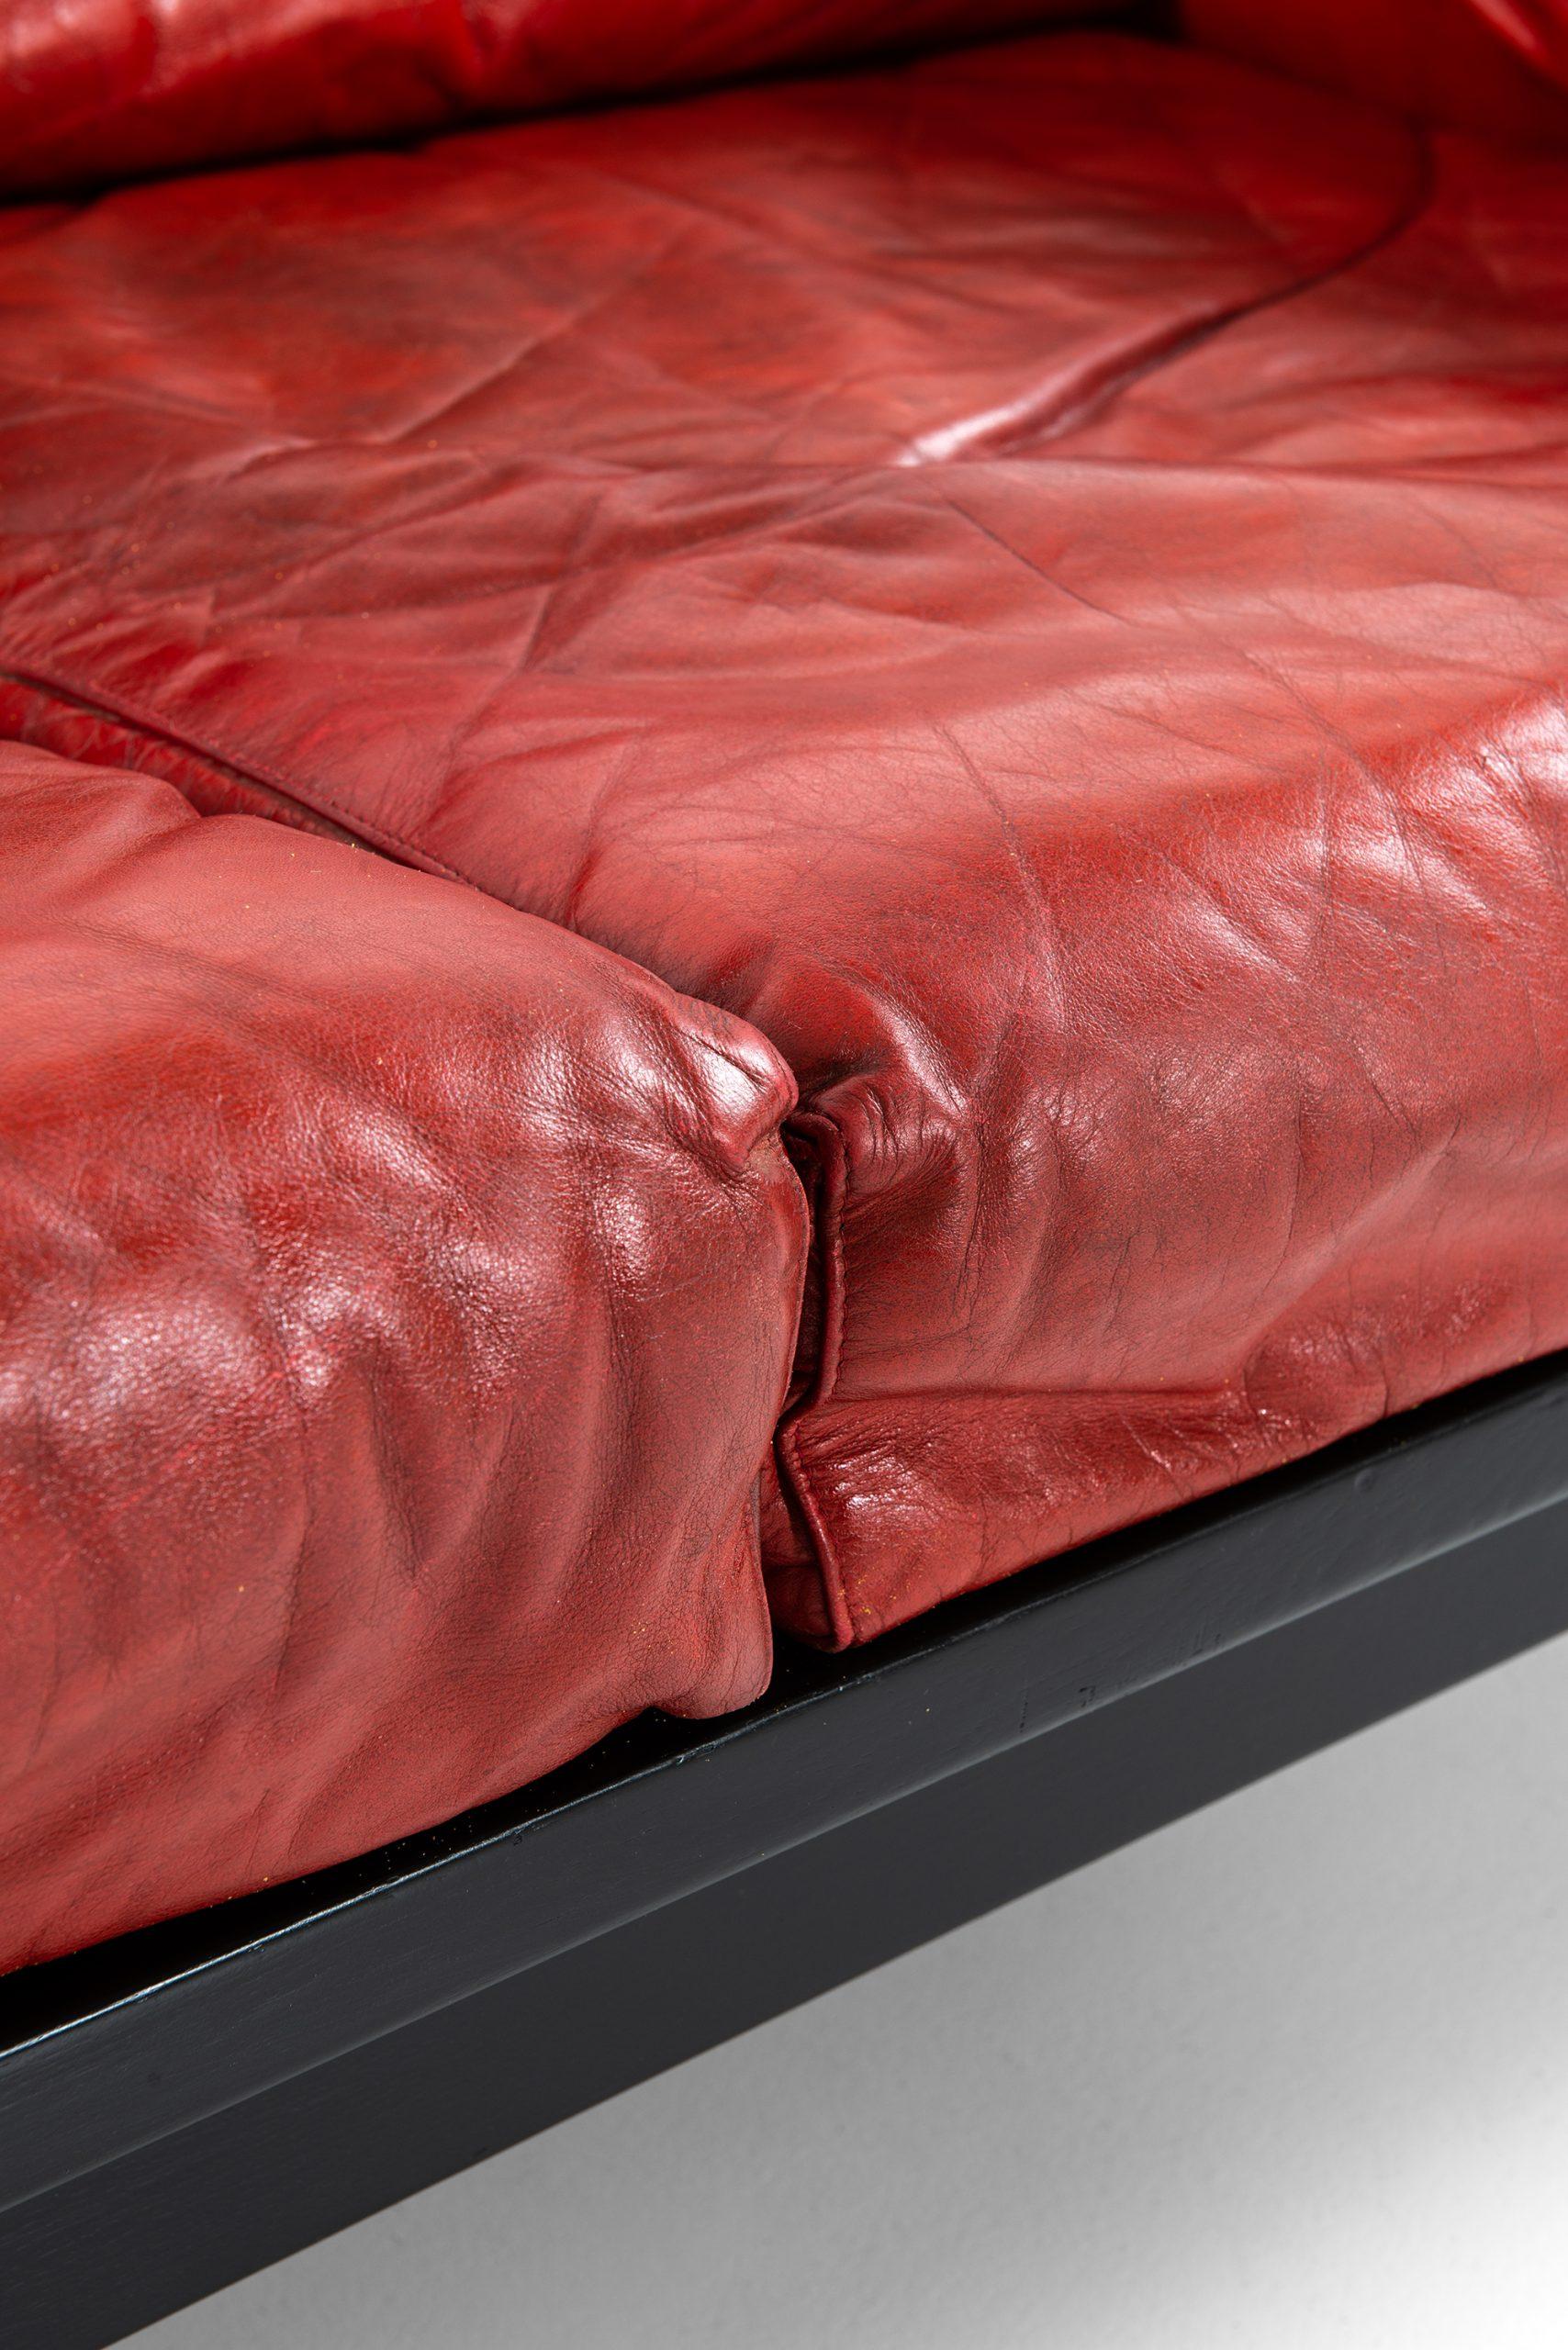 Sofa model Bastiano designed by Tobia Scarpa. Produced by Haimi in Finland.